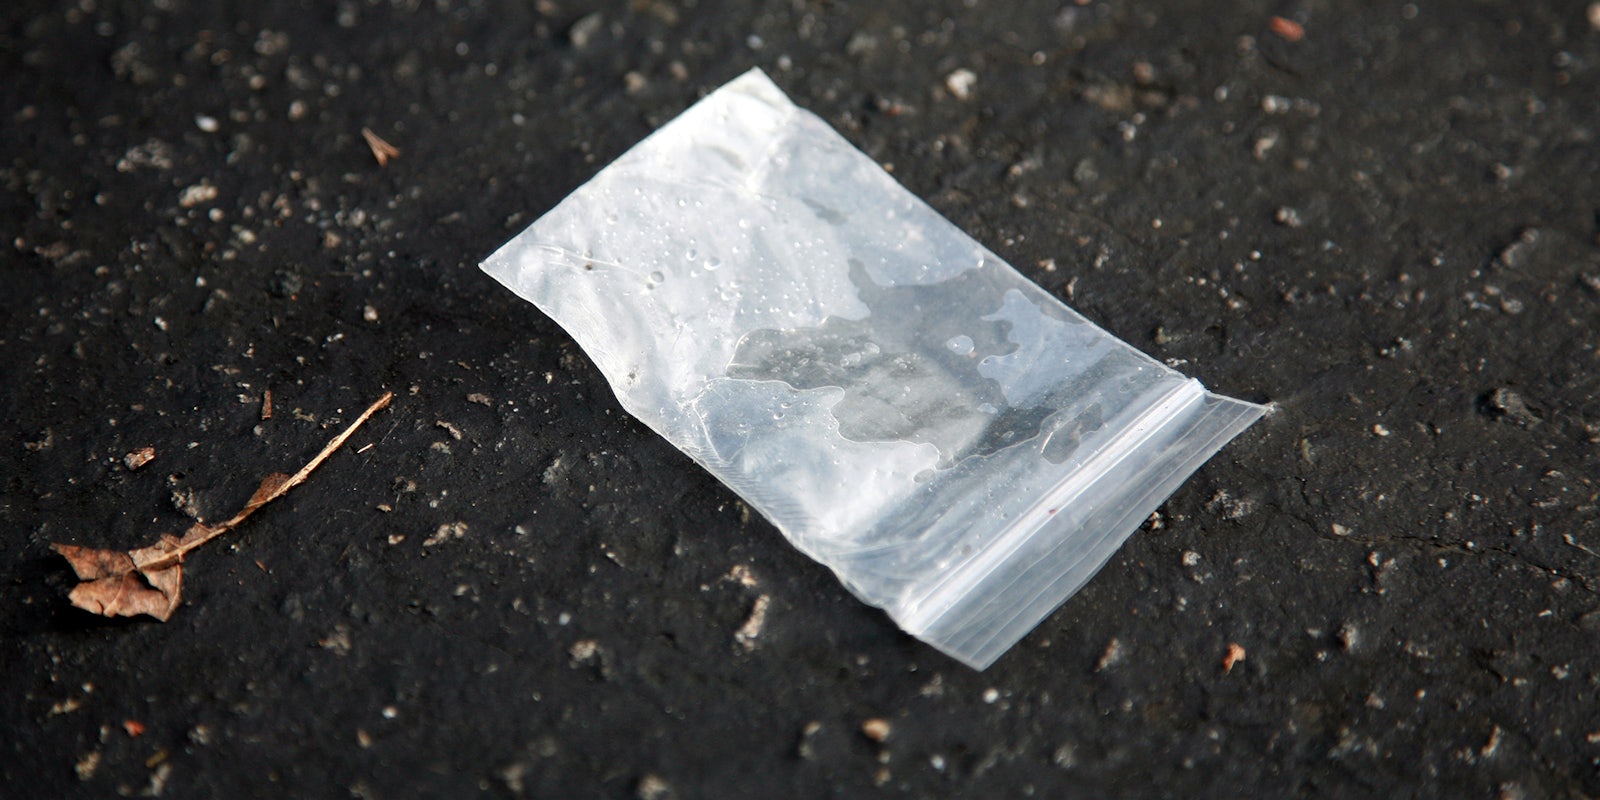 empty drug baggie highlighting police fentanyl overdoses